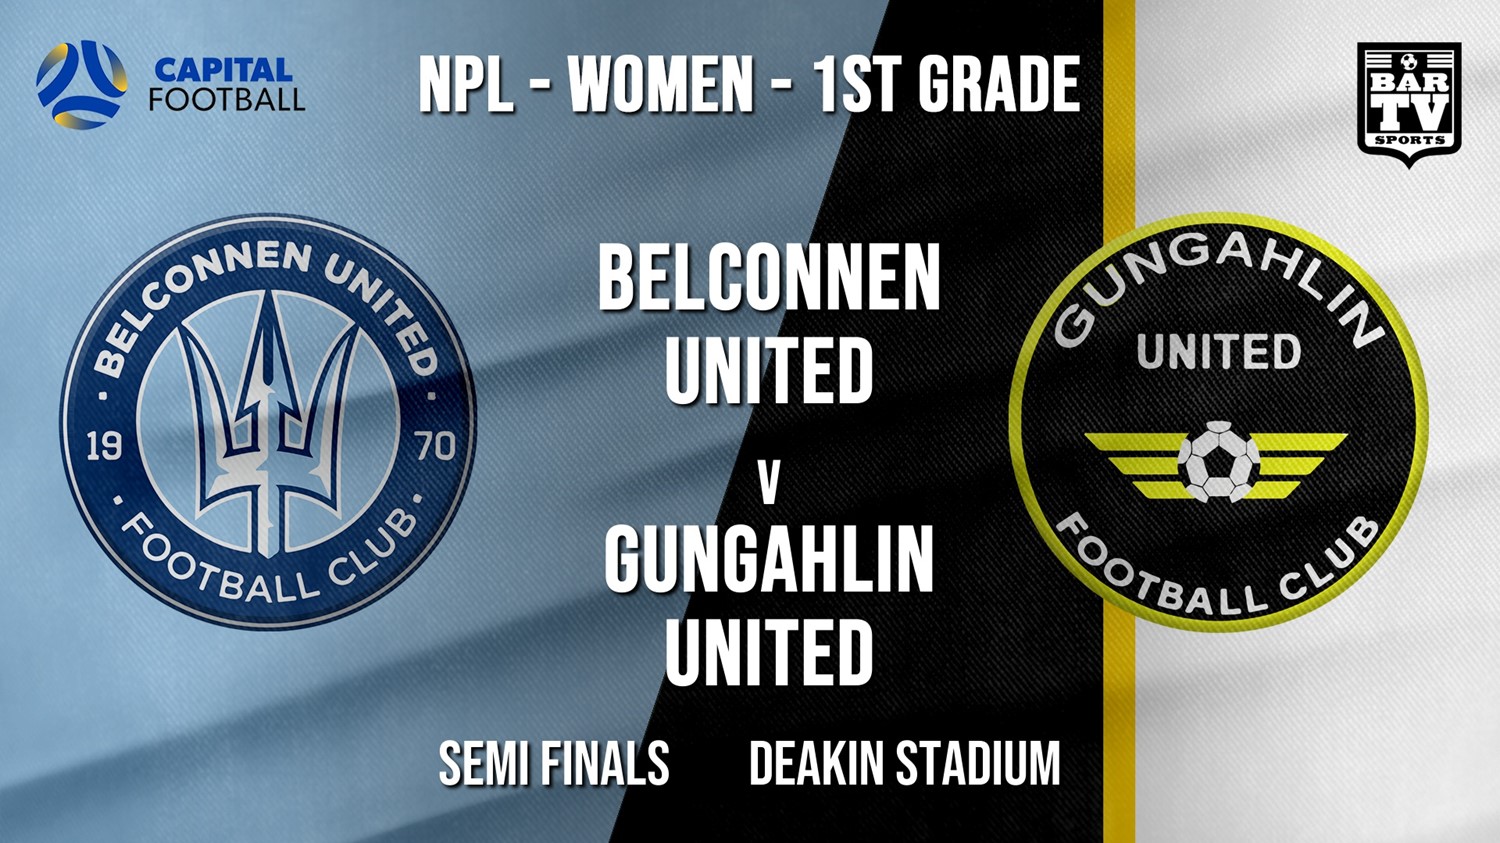 NPLW - Capital Semi Finals - Belconnen United (women) v Gungahlin United FC (women) Minigame Slate Image